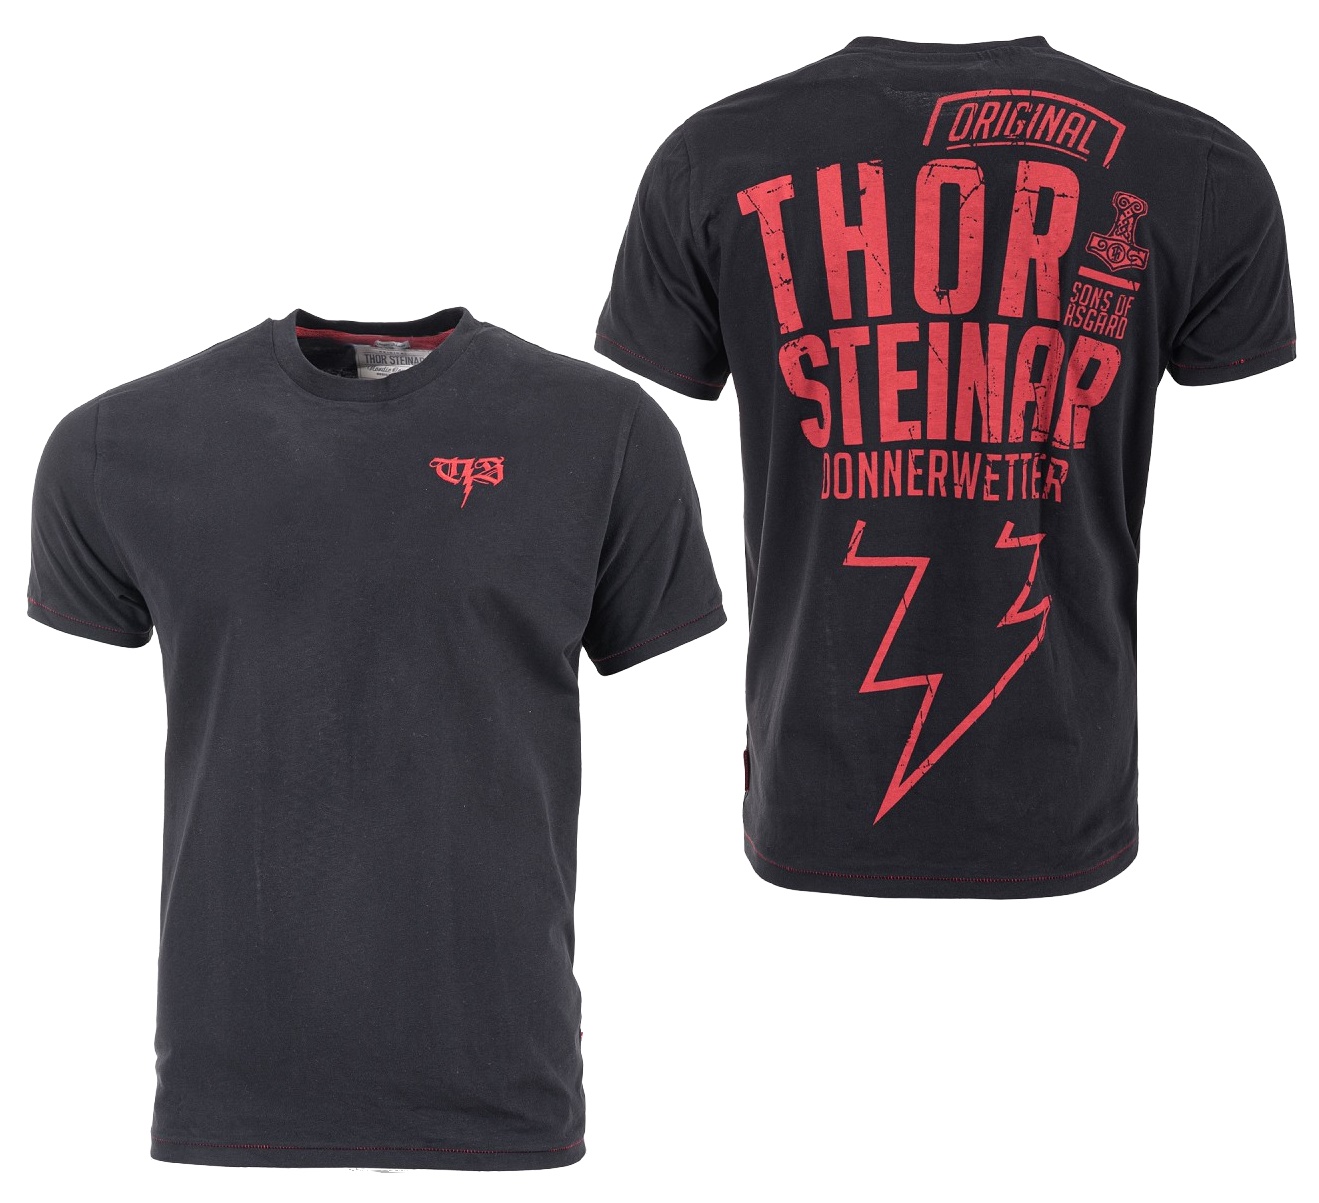 Thor Steinar T-Shirt Donnerwetter 2.0